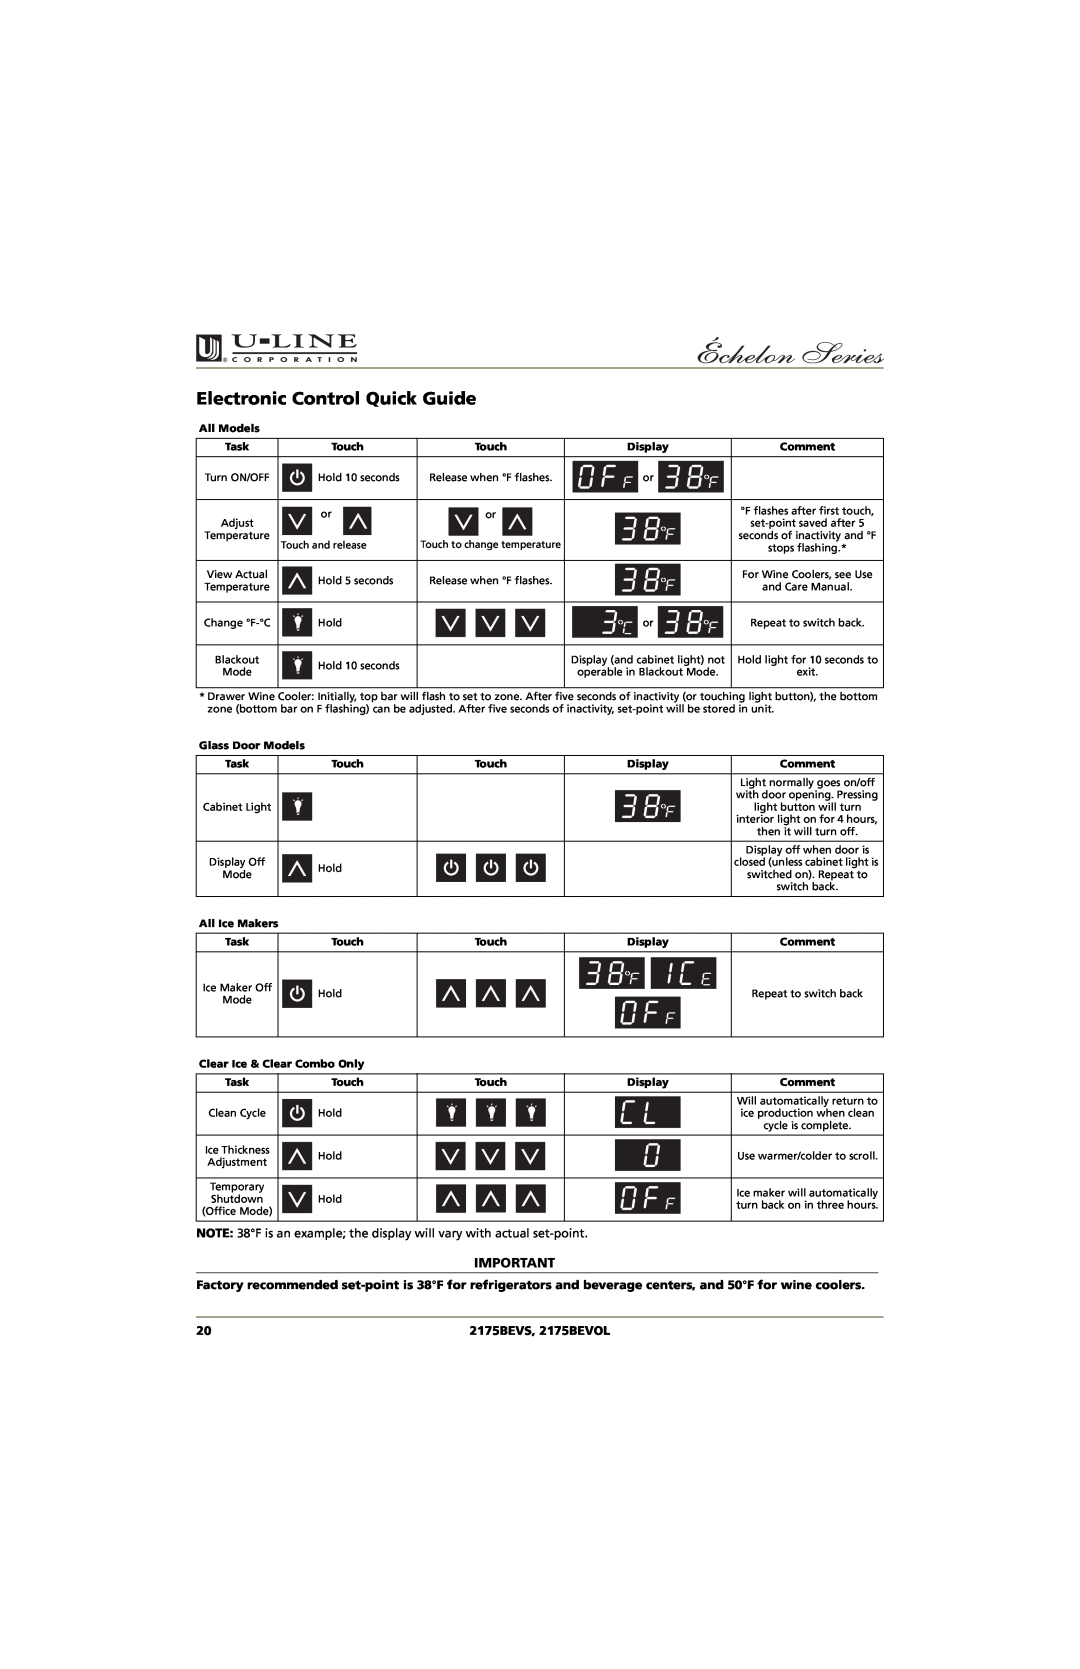 U-Line manual Electronic Control Quick Guide, 2175BEVS, 2175BEVOL 